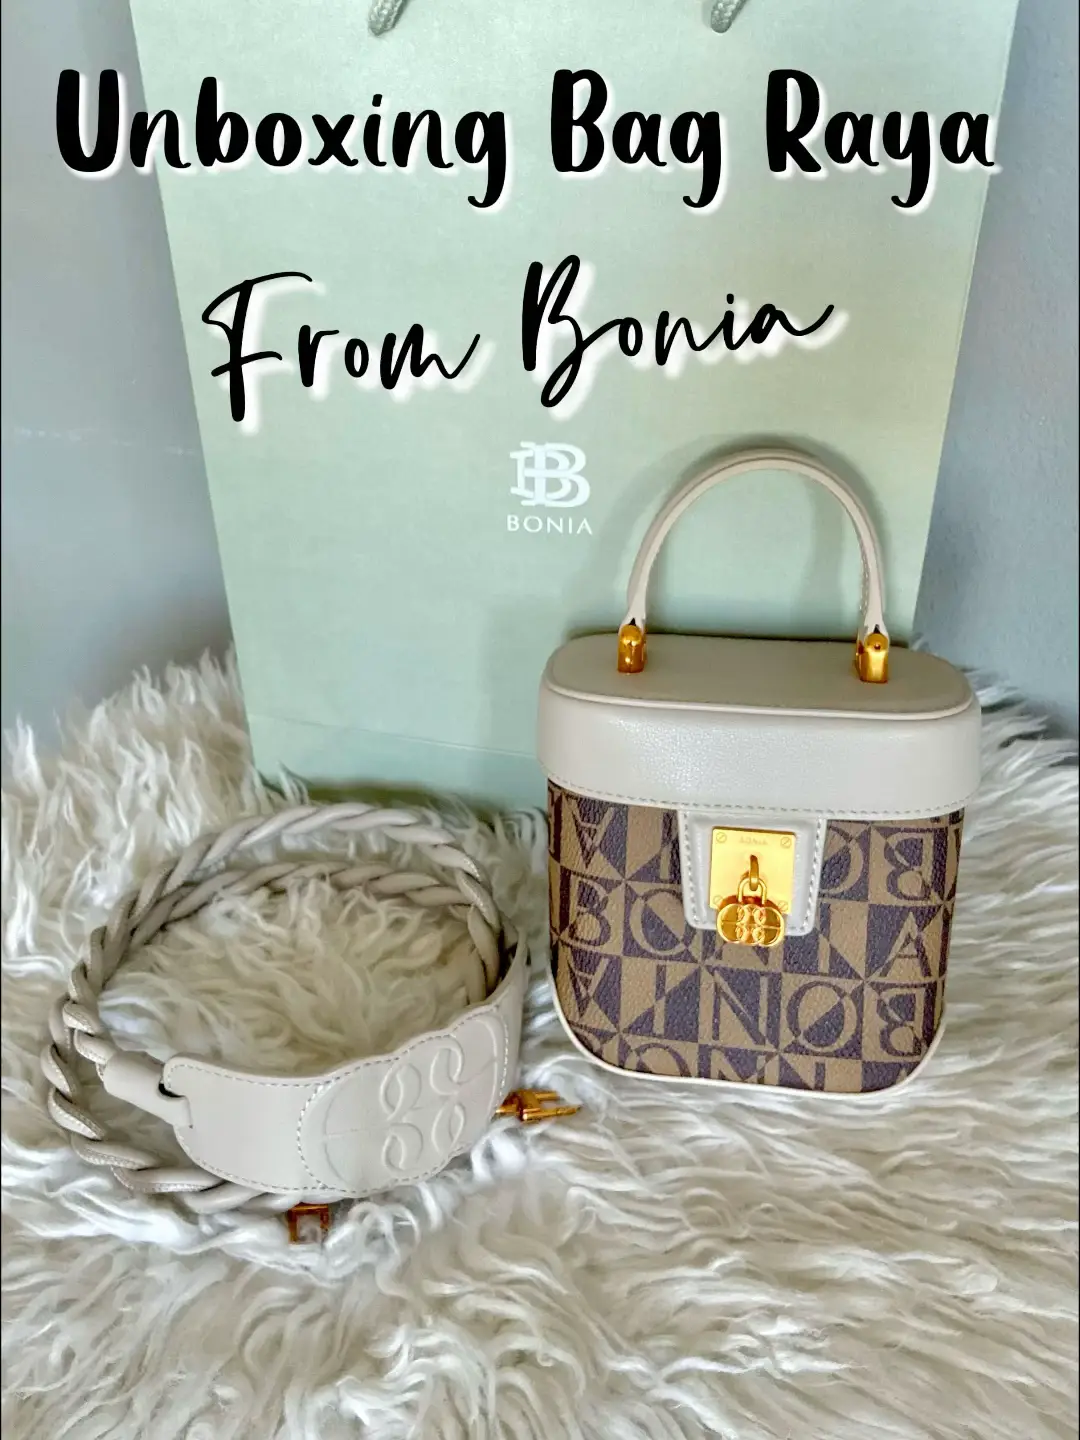 Limited Edition Bonia Bag